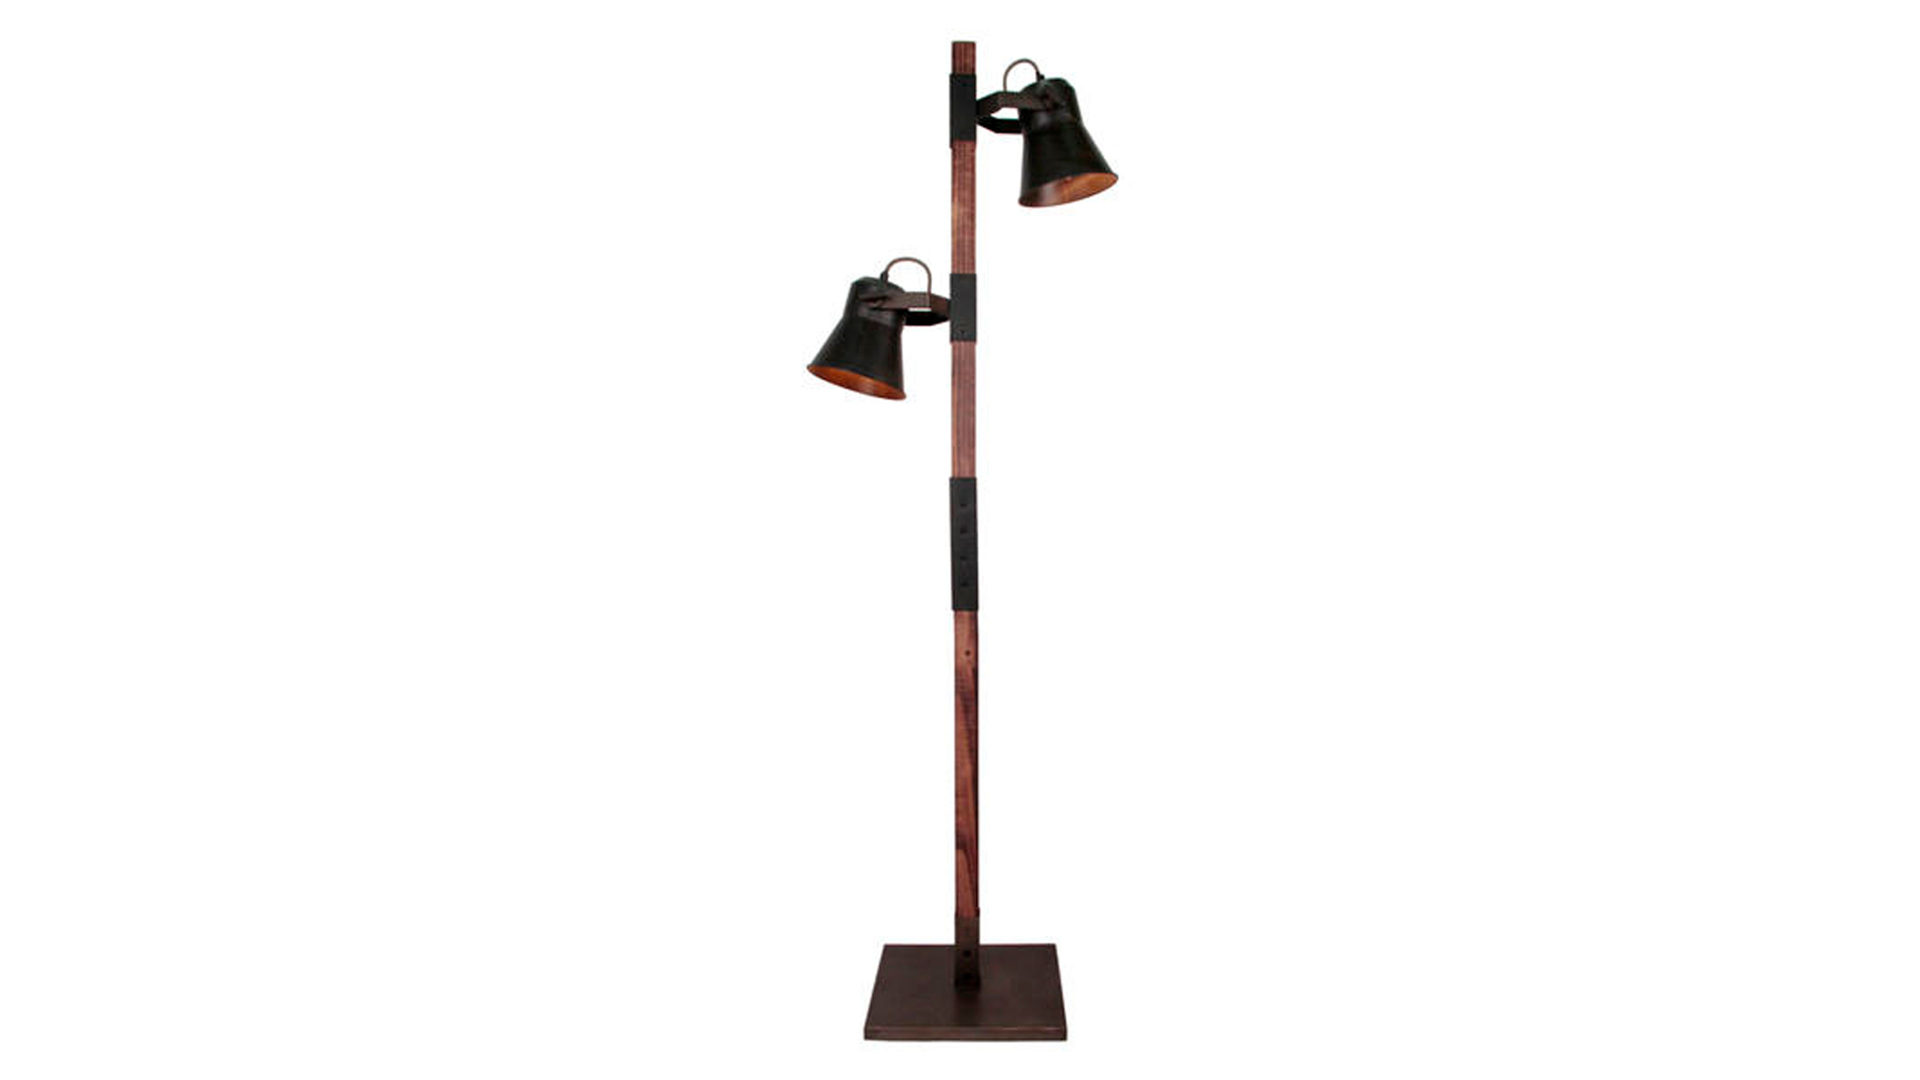 Brilliant Tischlampe Plow, schwarzer Stahl & Holz – Höhe ca. 55 cm,  Lamstedt, Cuxhaven, Bremerhaven